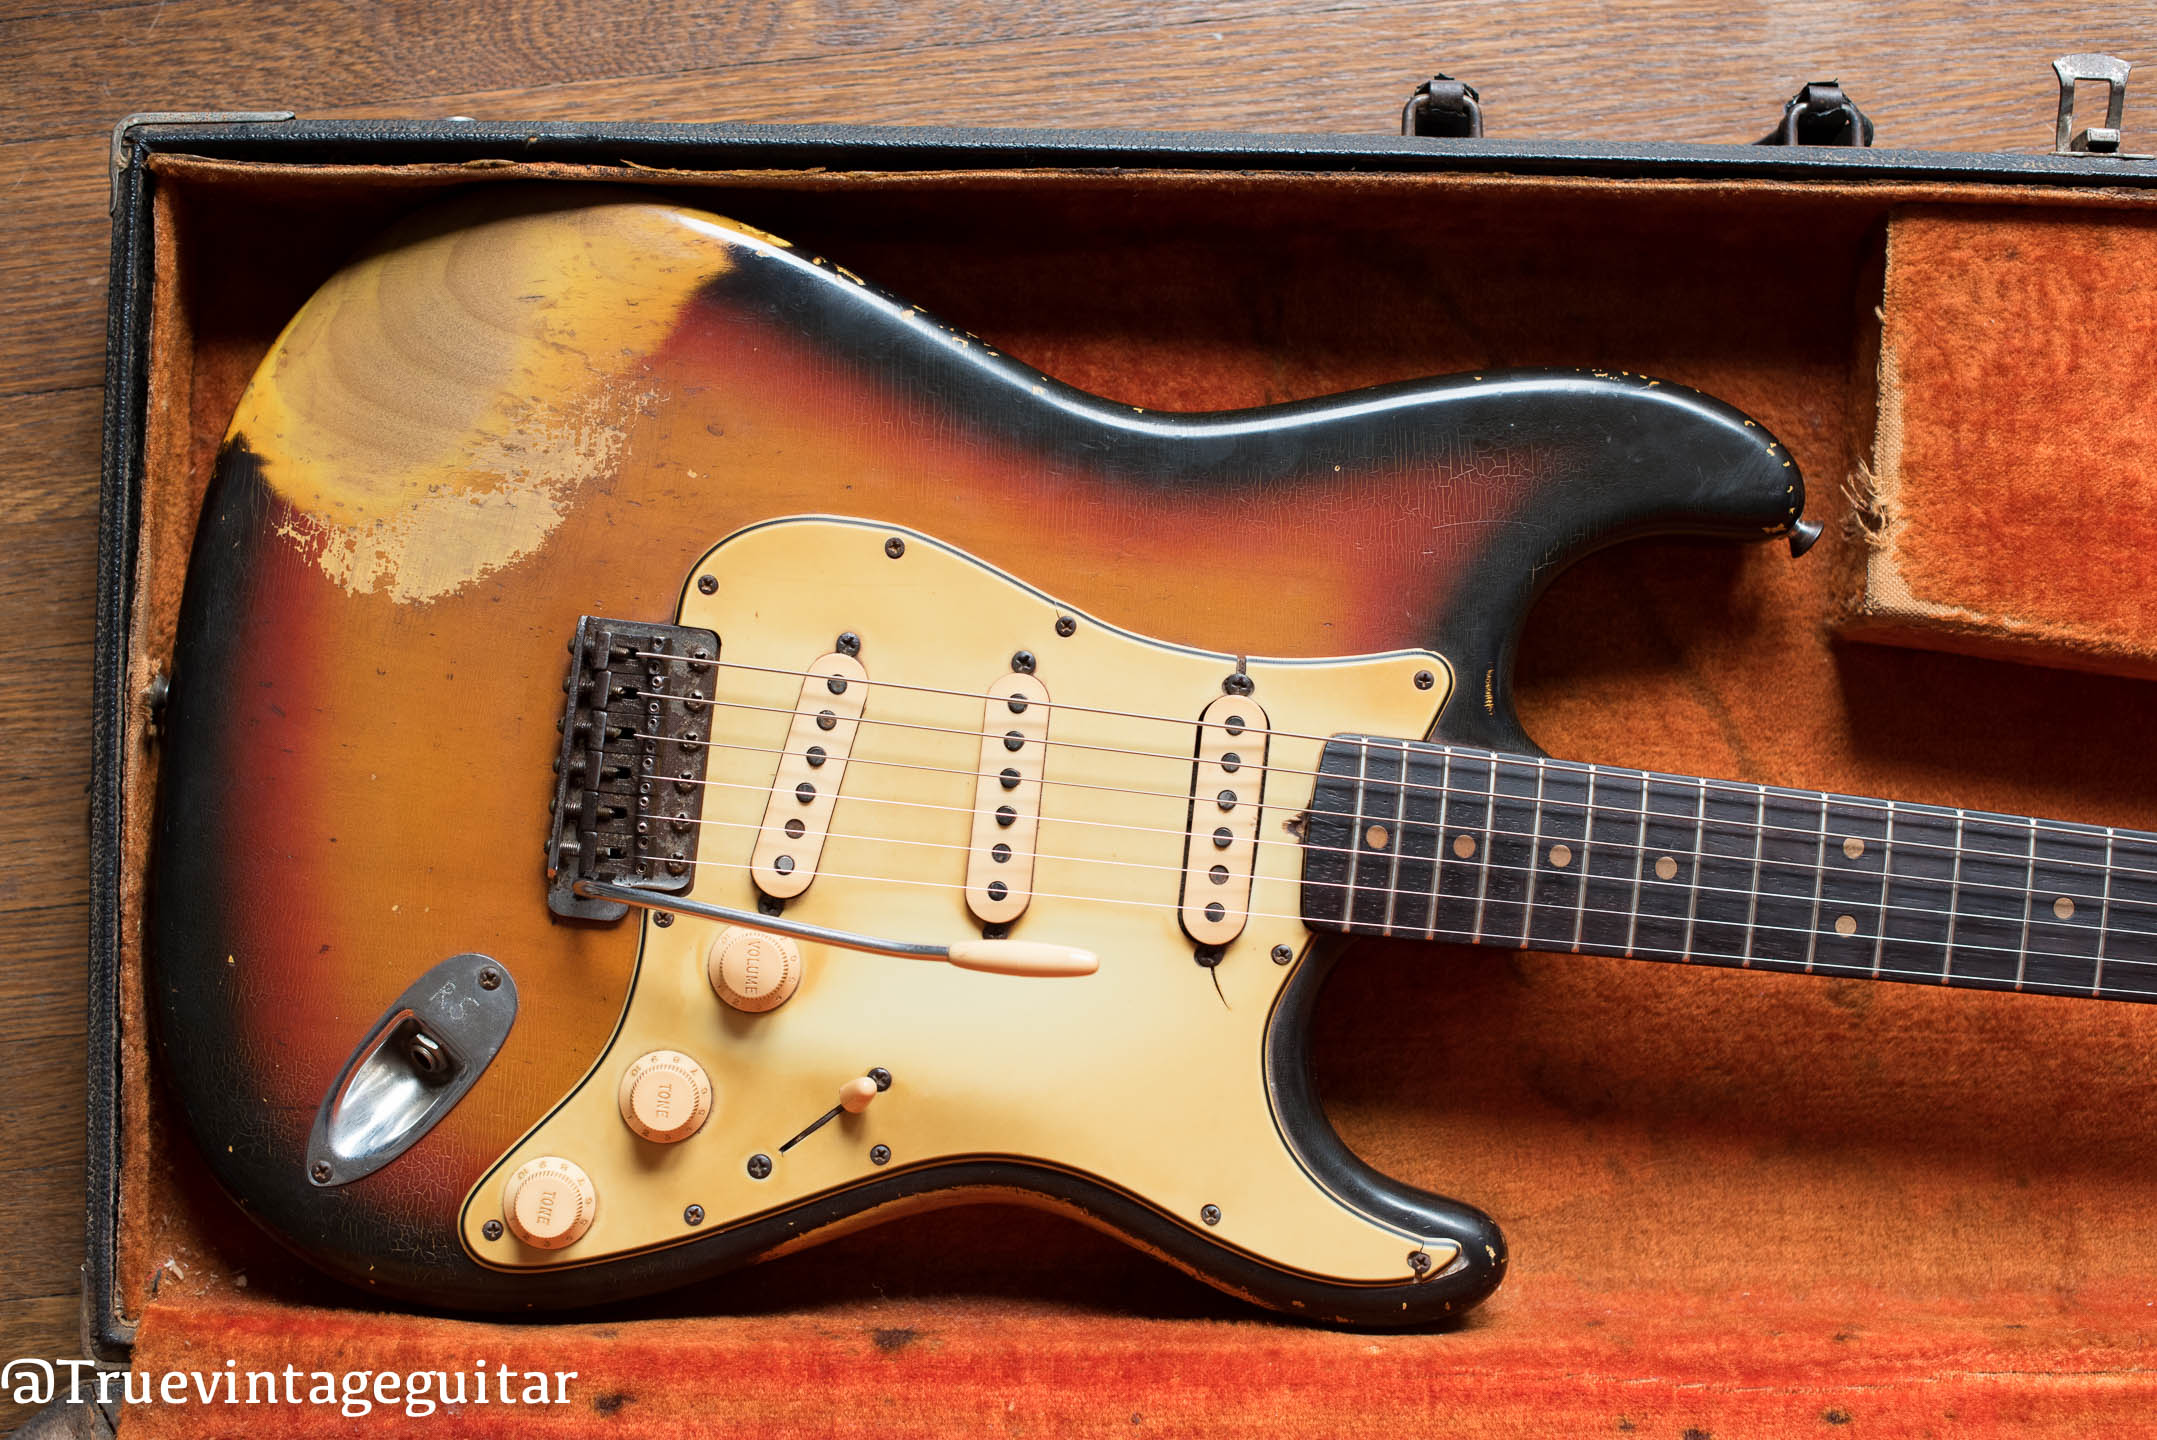 Fender Stratocaster 1964 vintage original guitar. How to date Fender Stratocaster and values.